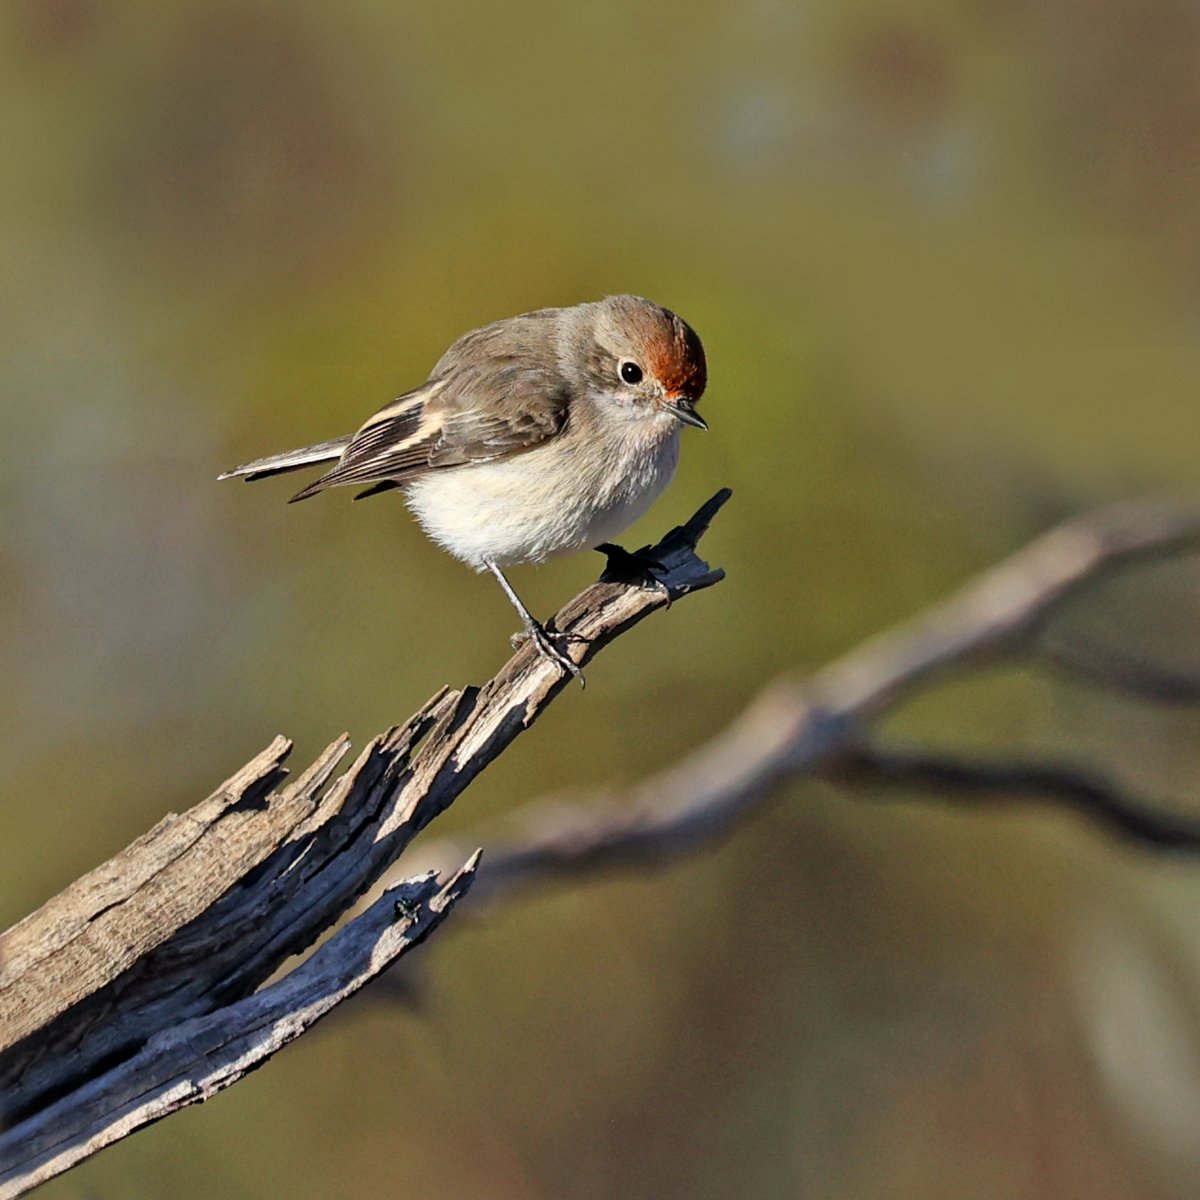 A female red-capped robin.
Gluepot Reserve, South Australia.